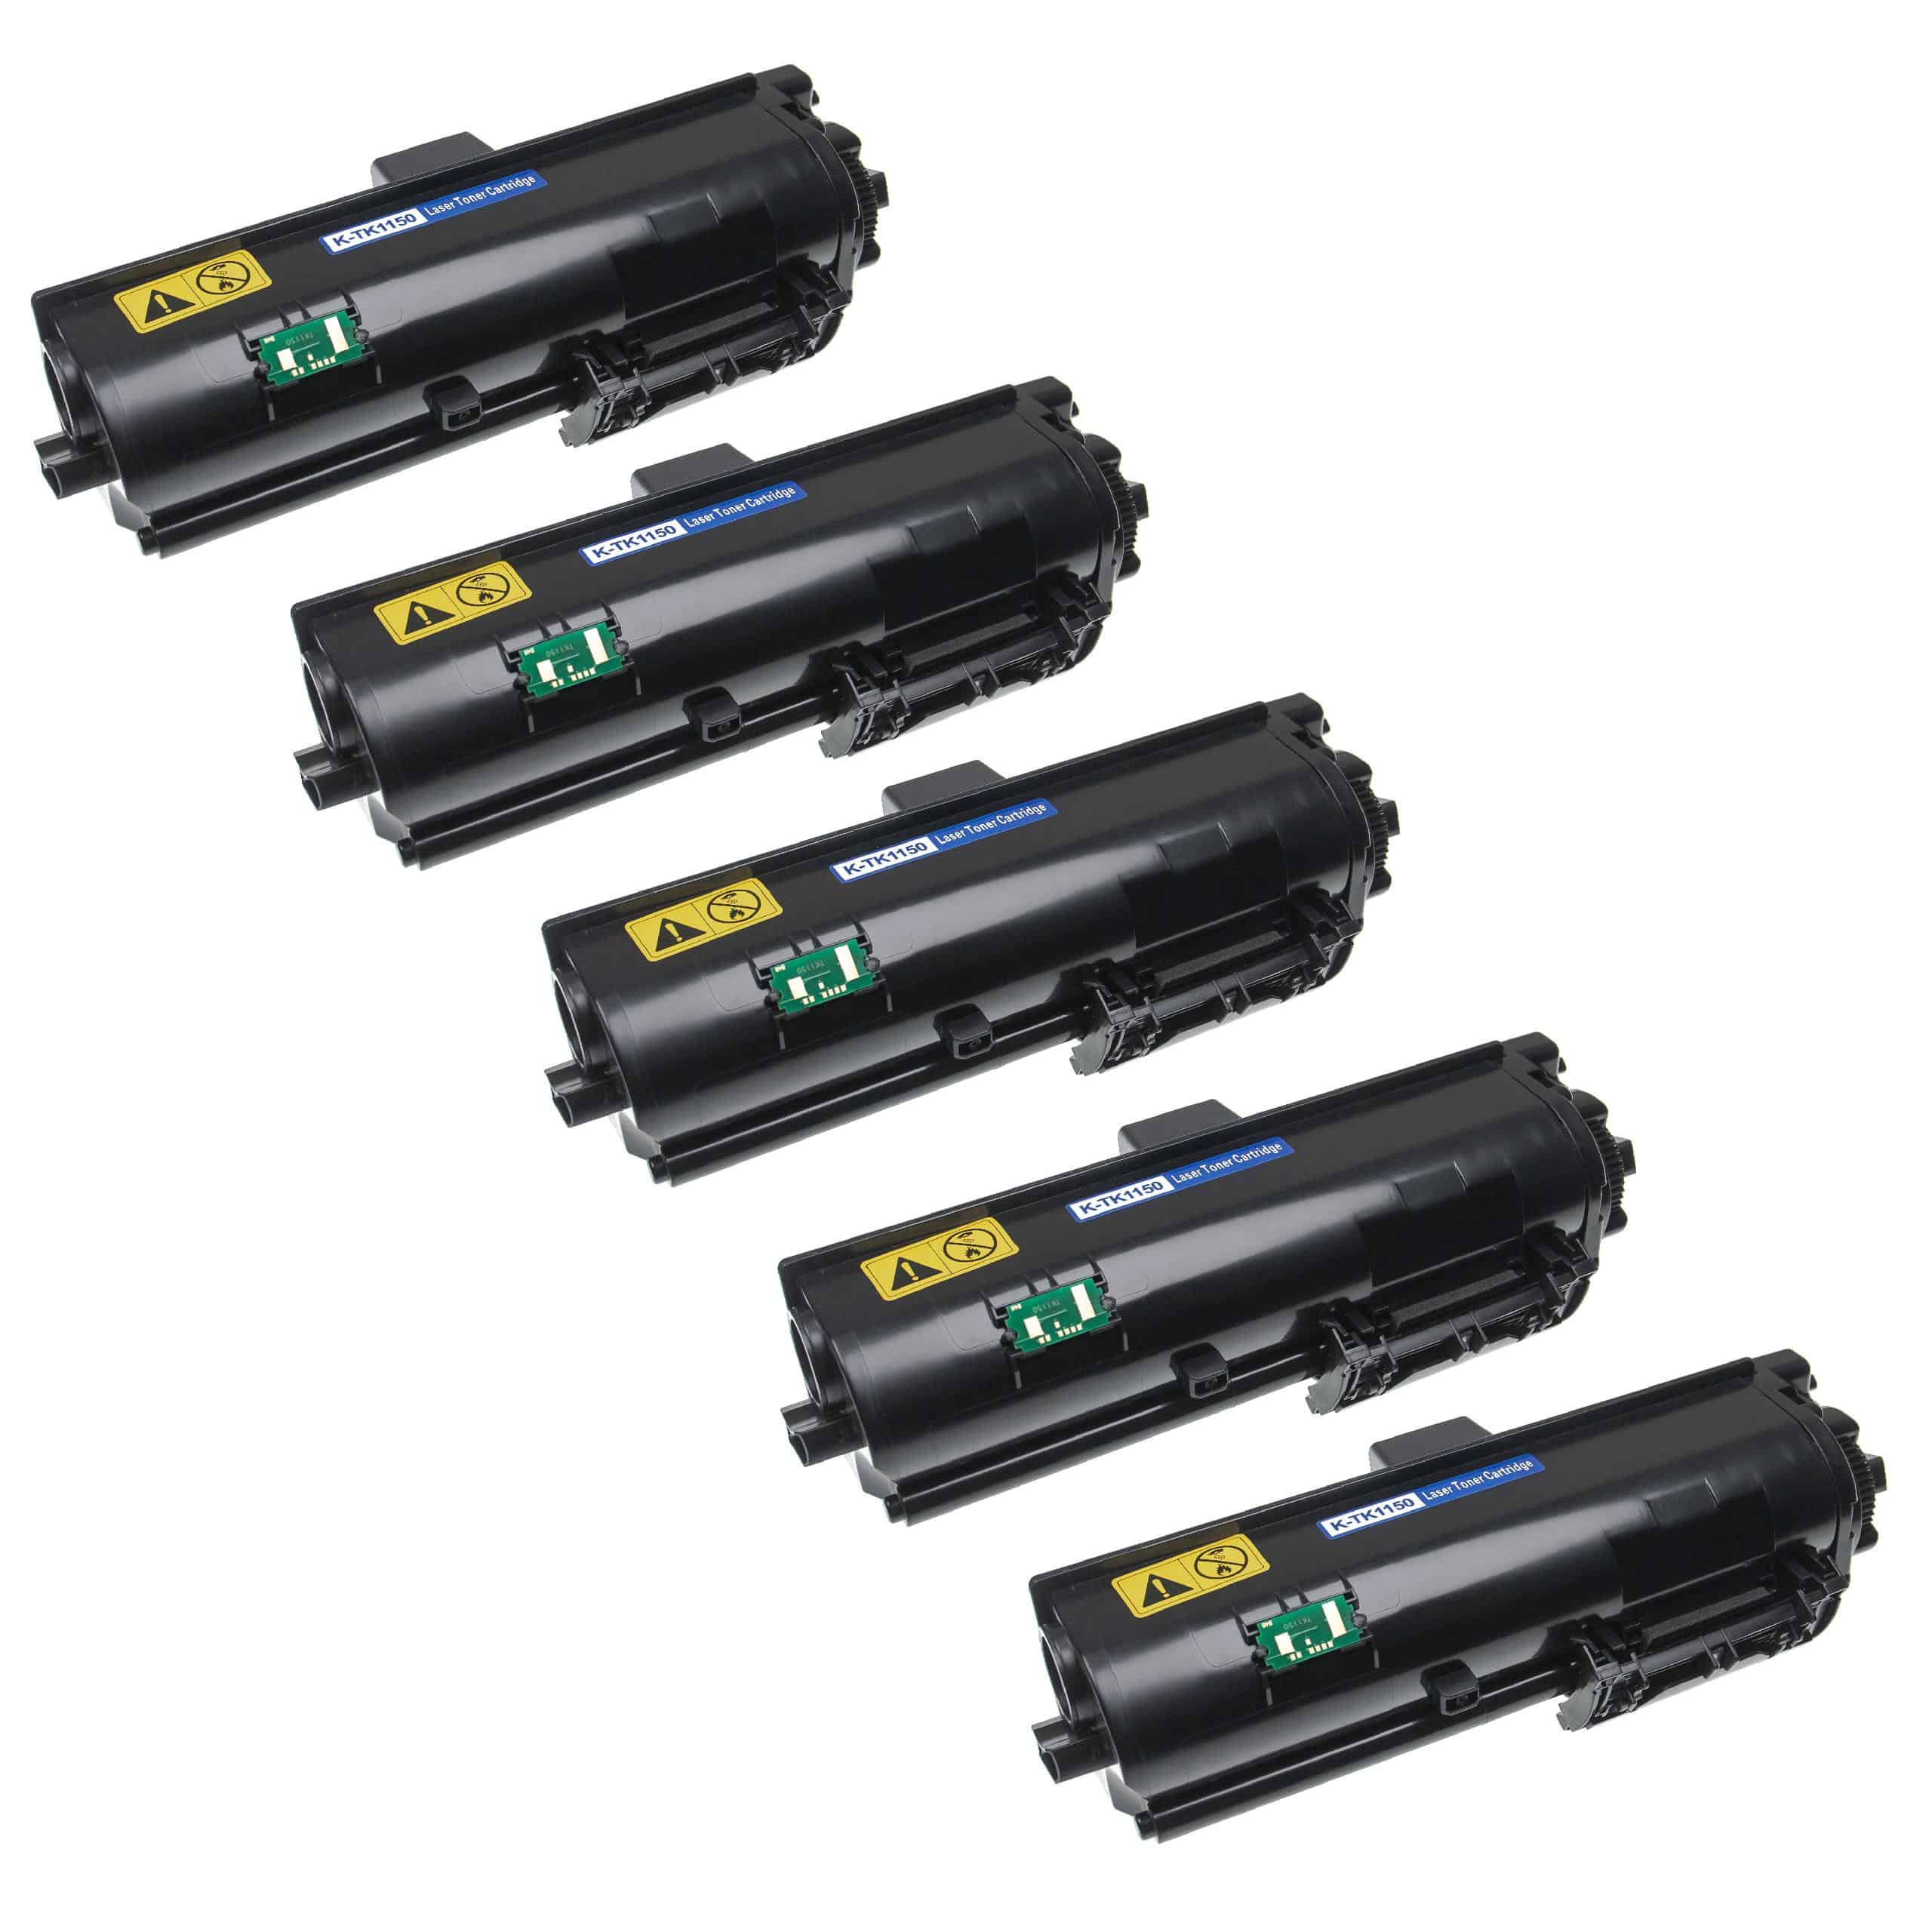 5x Tóner reemplaza Kyocera TK-1150 compatible con impresoras Kyocera, negro